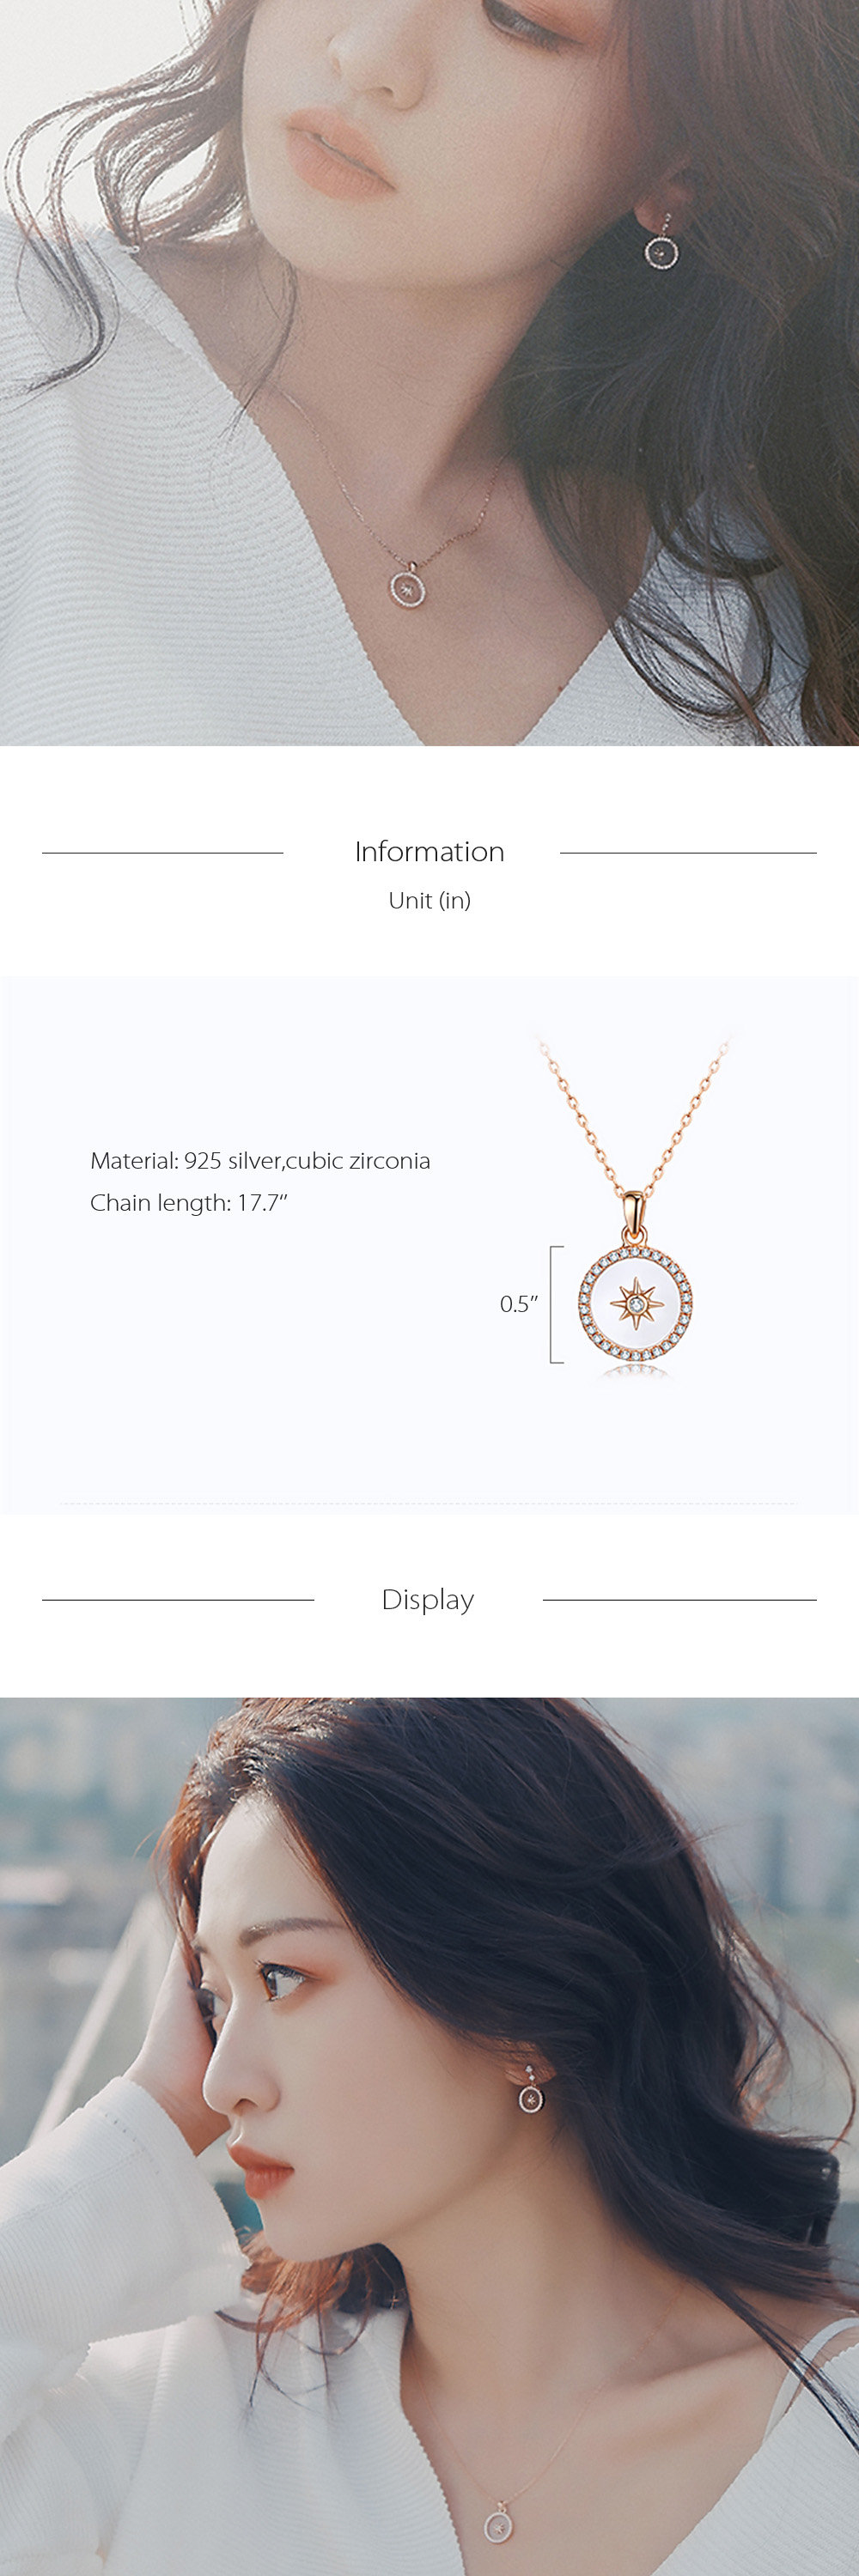 krkc north star compass necklace pendant| Alibaba.com